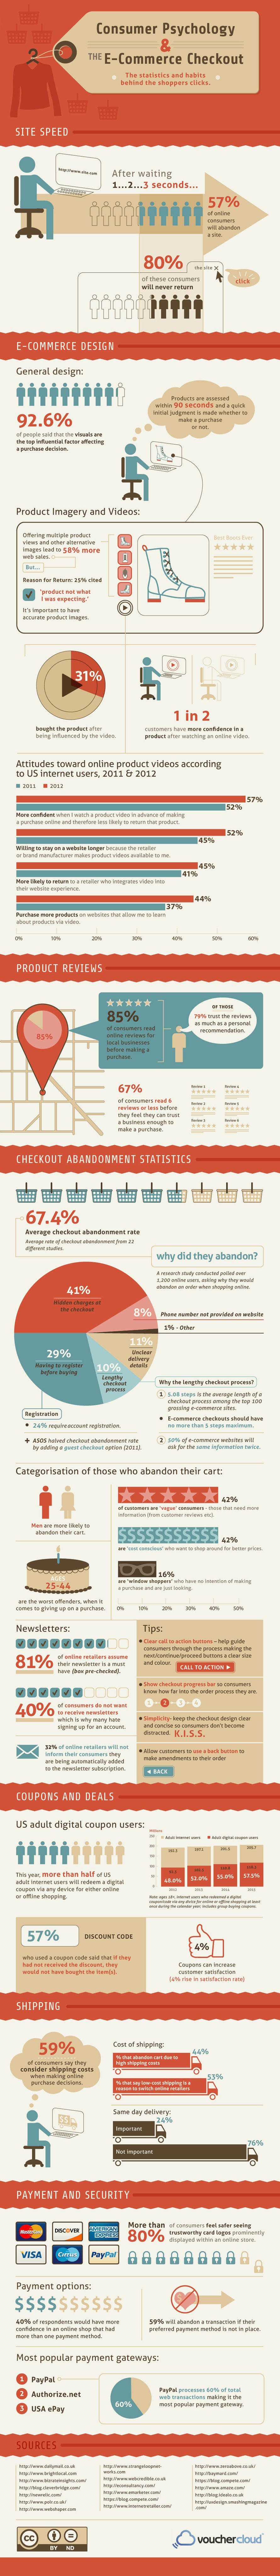 E-Commerce Consumer Psychology Infographic